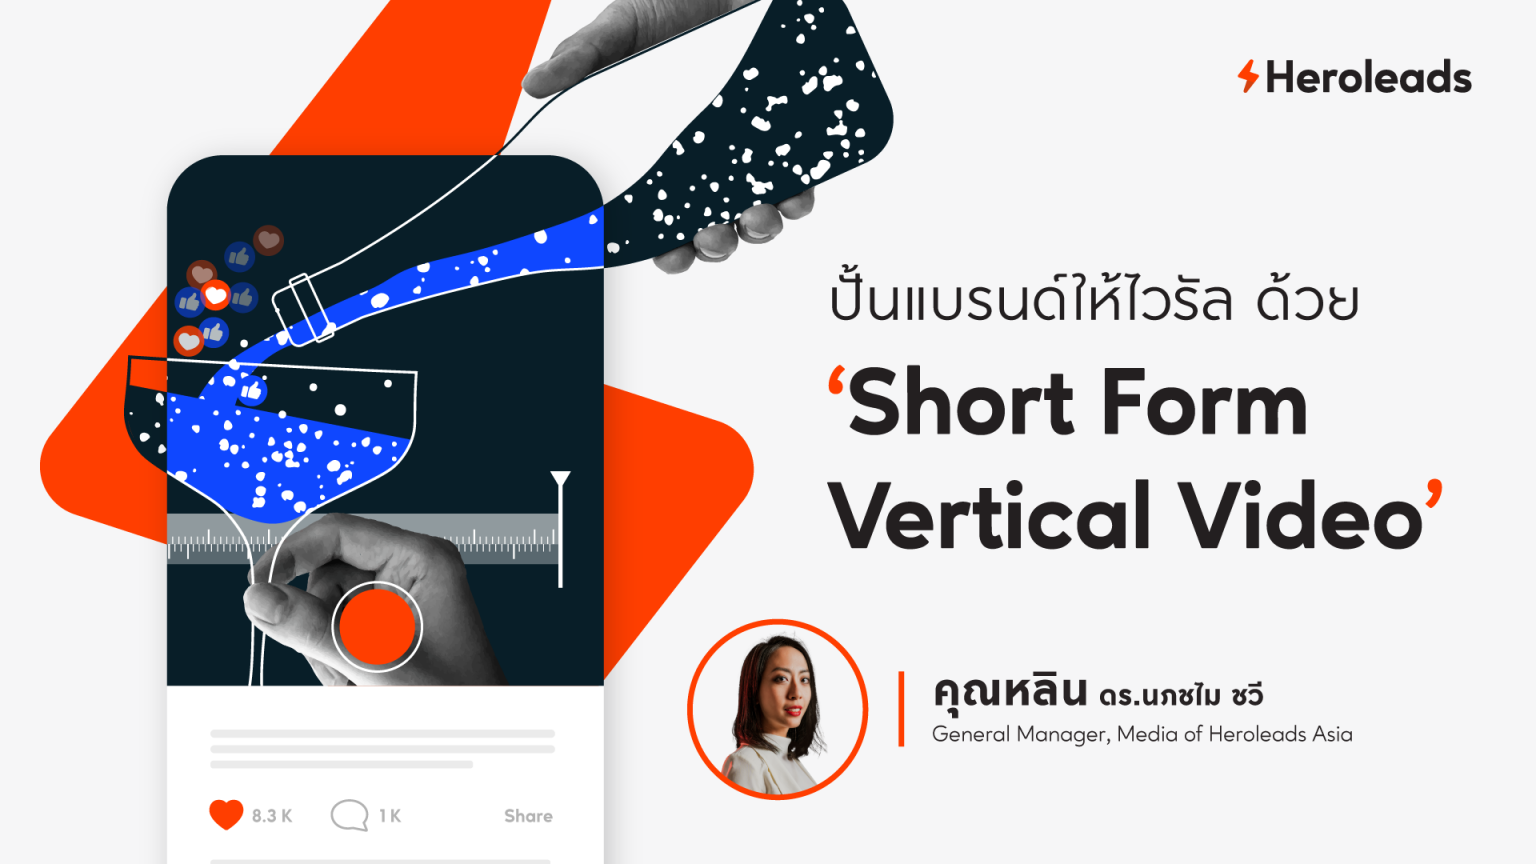 Short Form Vertical Video